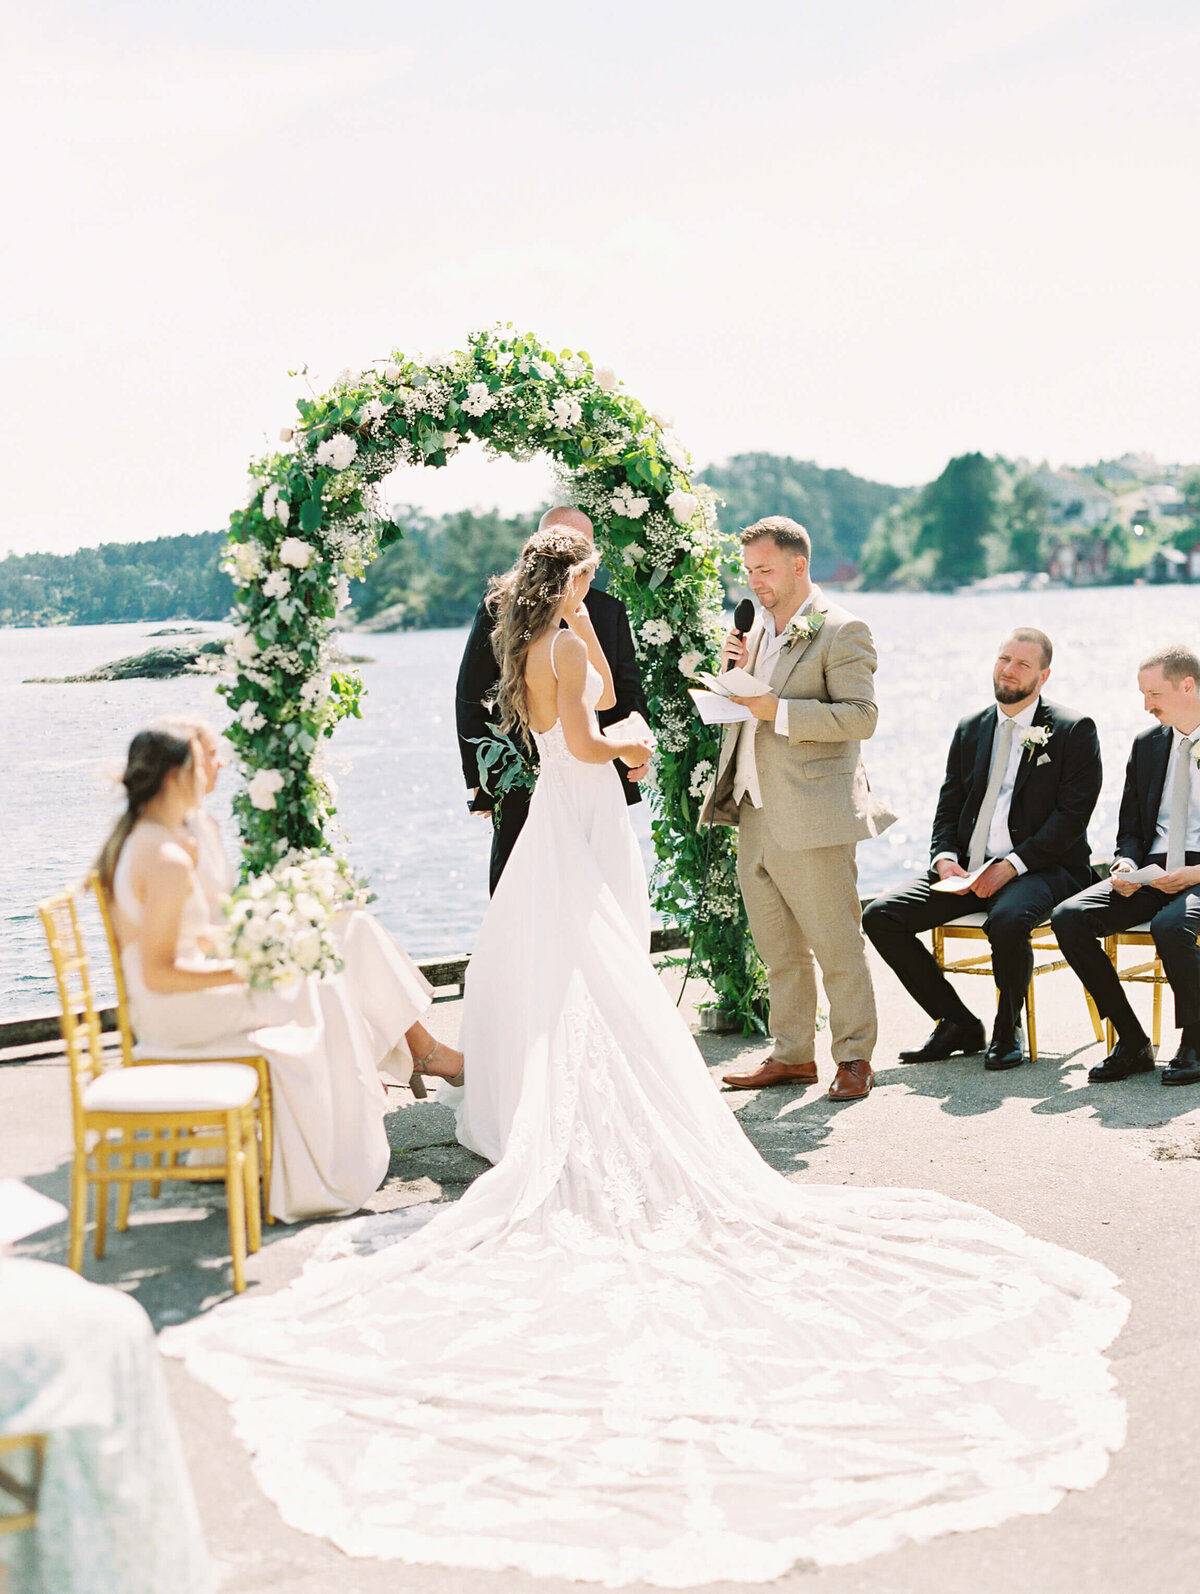 Lisa-Leanne-Photography_Bergen-Norway-Wedding_International-Wedding-Photographer_Destination-Wedding-Photographer_35